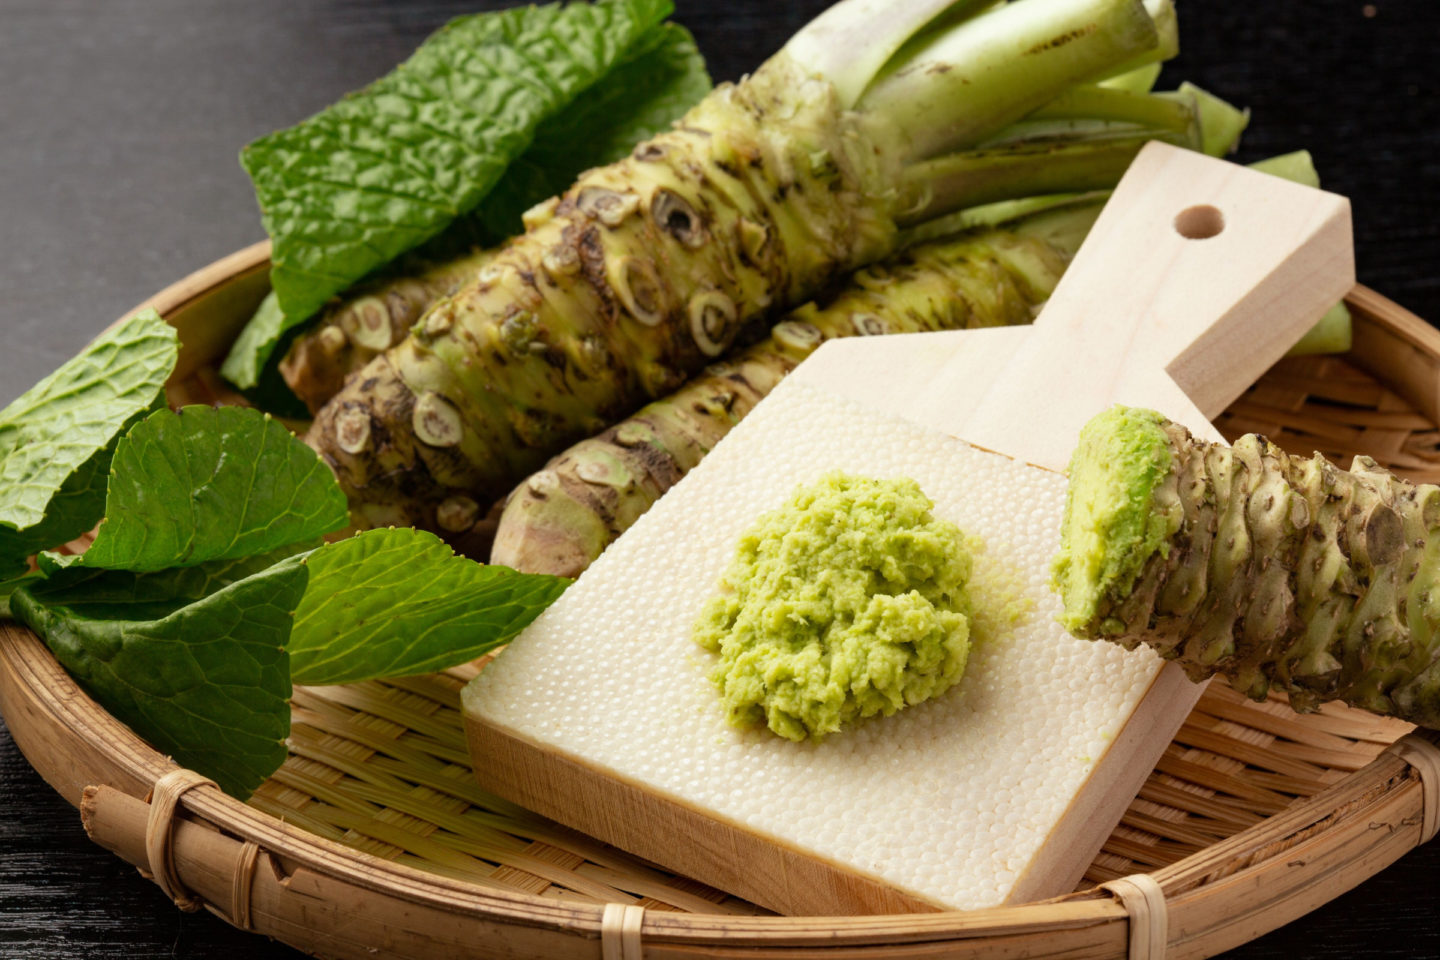 wasabi paste made from Japanese horseradish